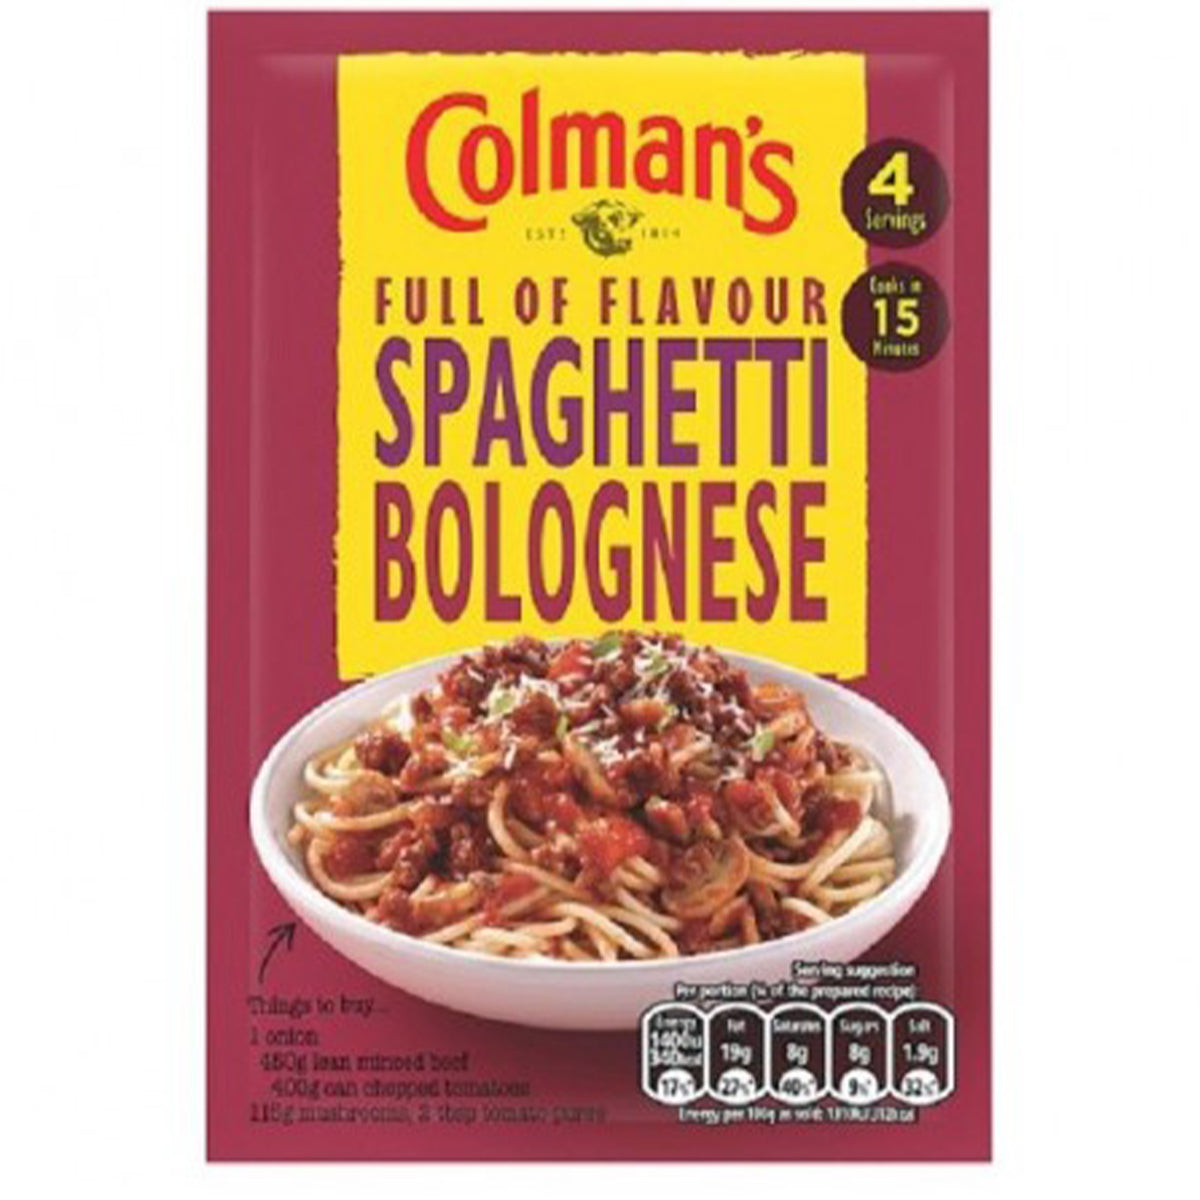 Colmans full of flavour spaghetti bolognese.